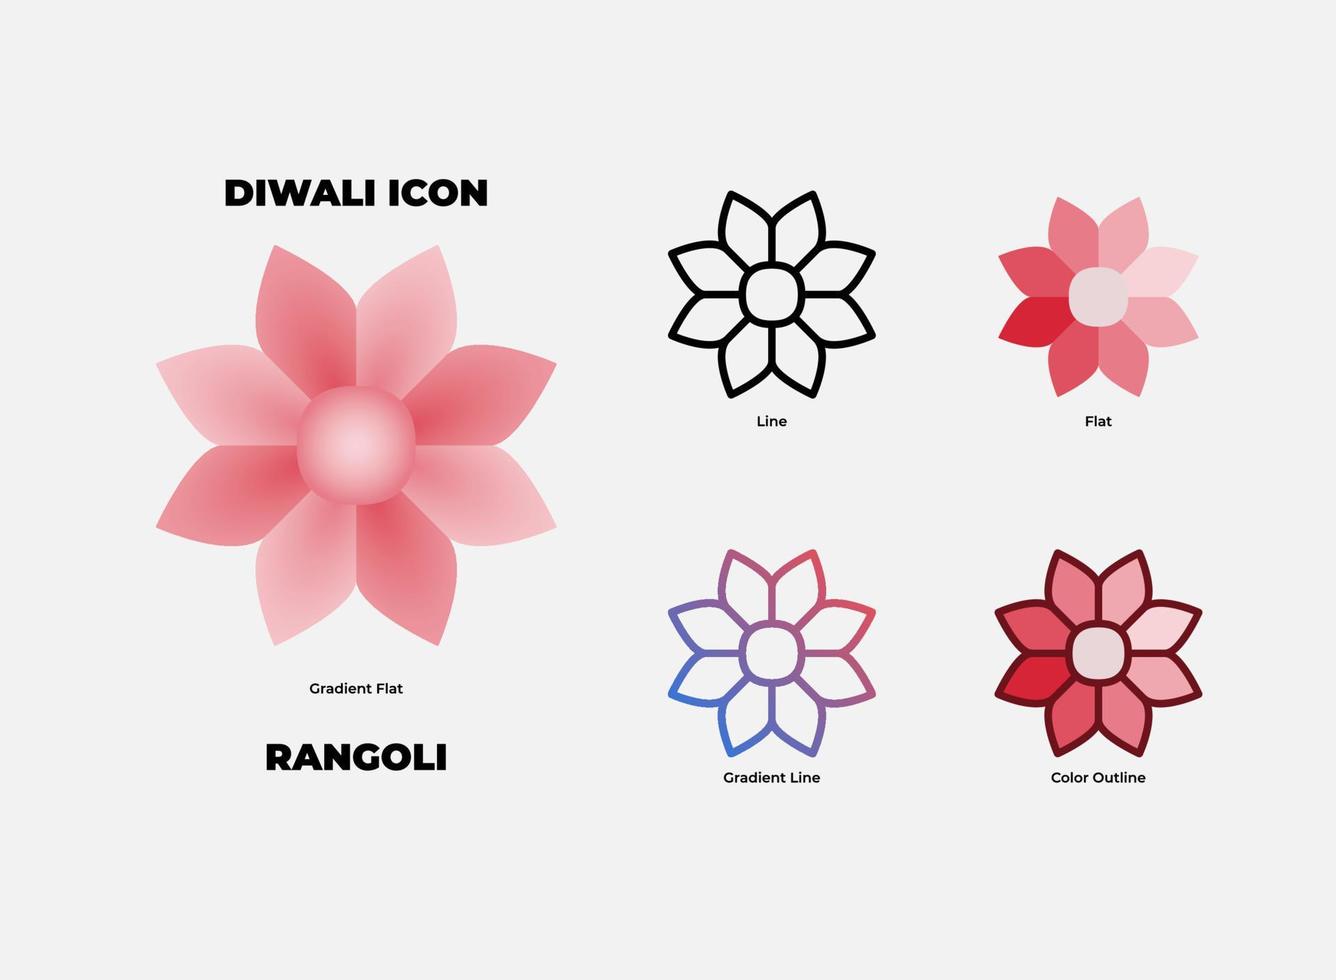 diwali rangoli ikonuppsättning vektor